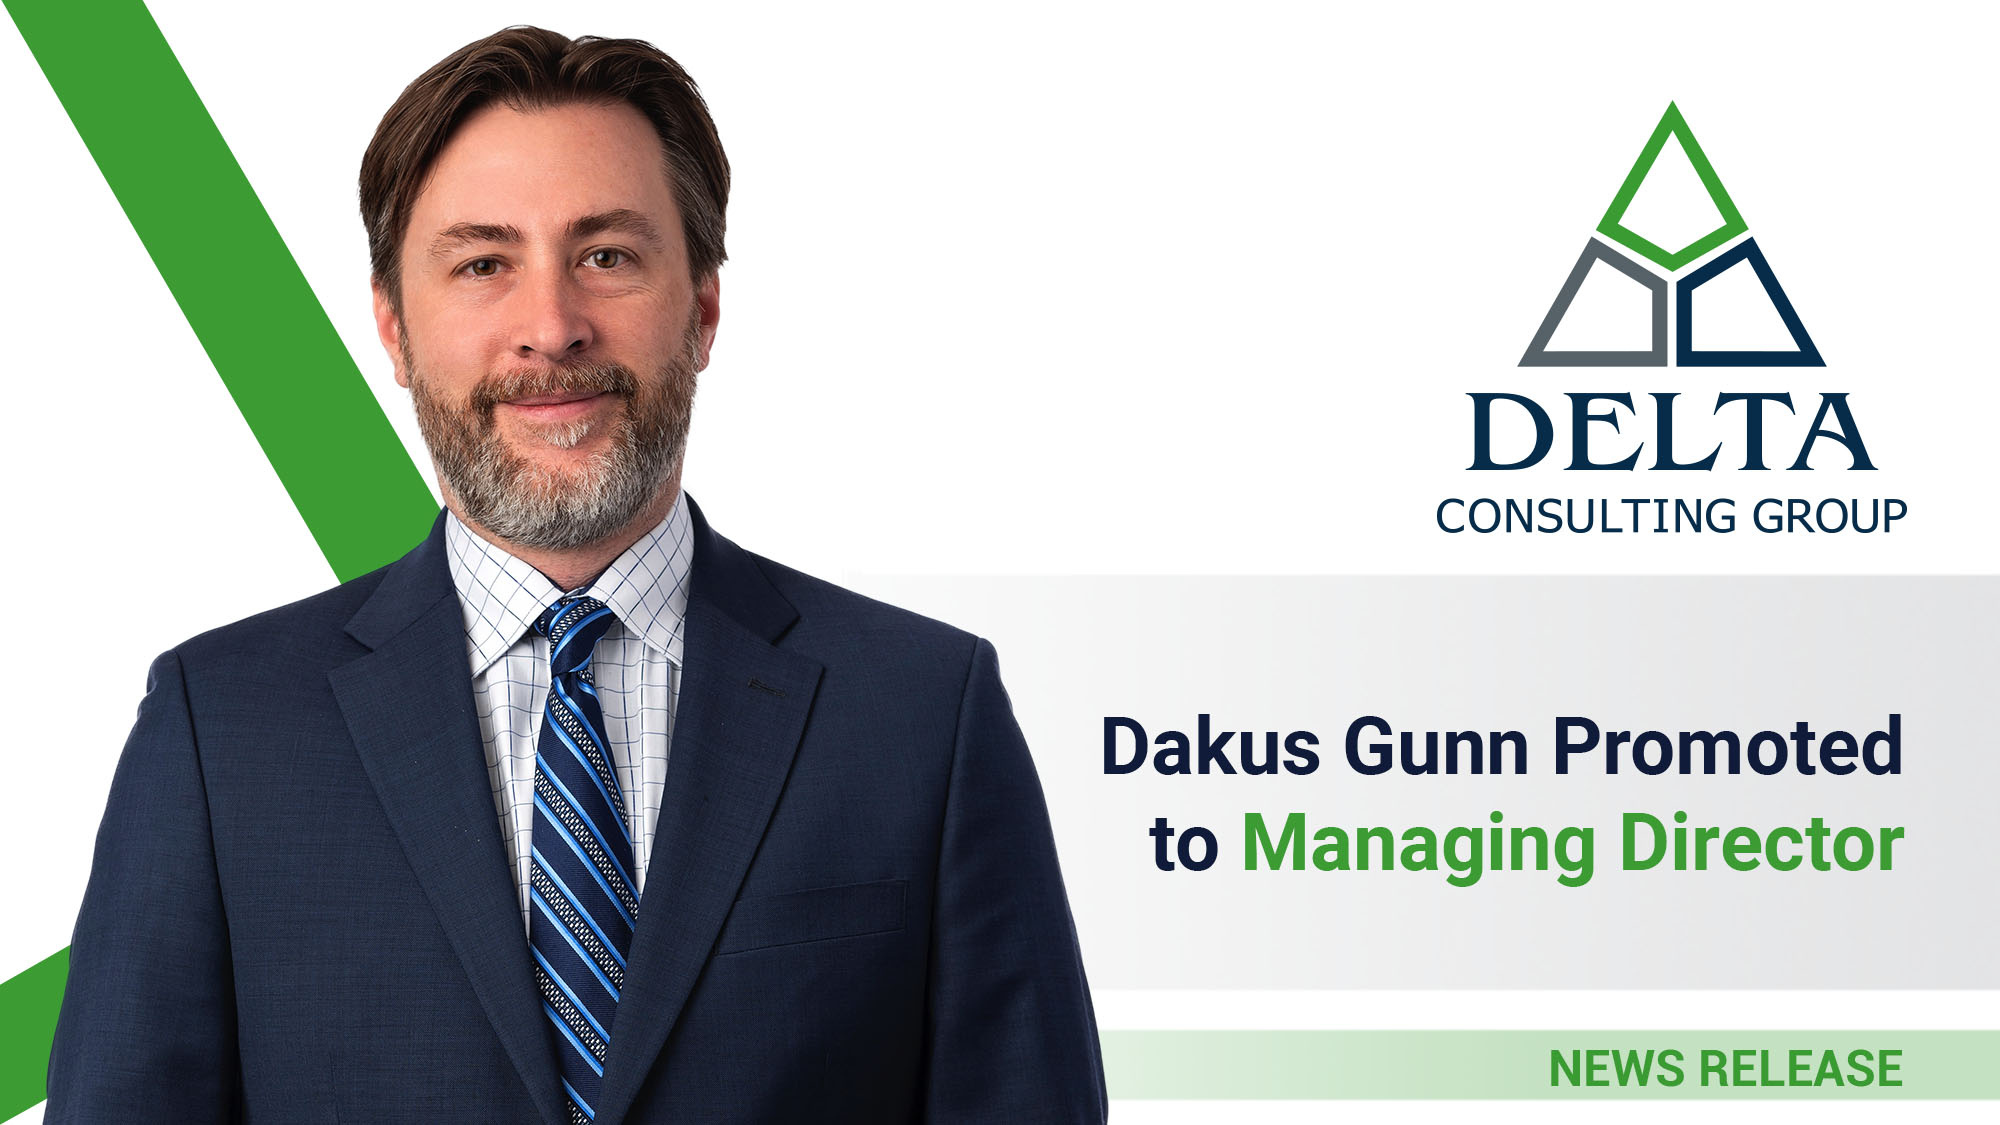 Dakus Gunn Promoted to Managing Director